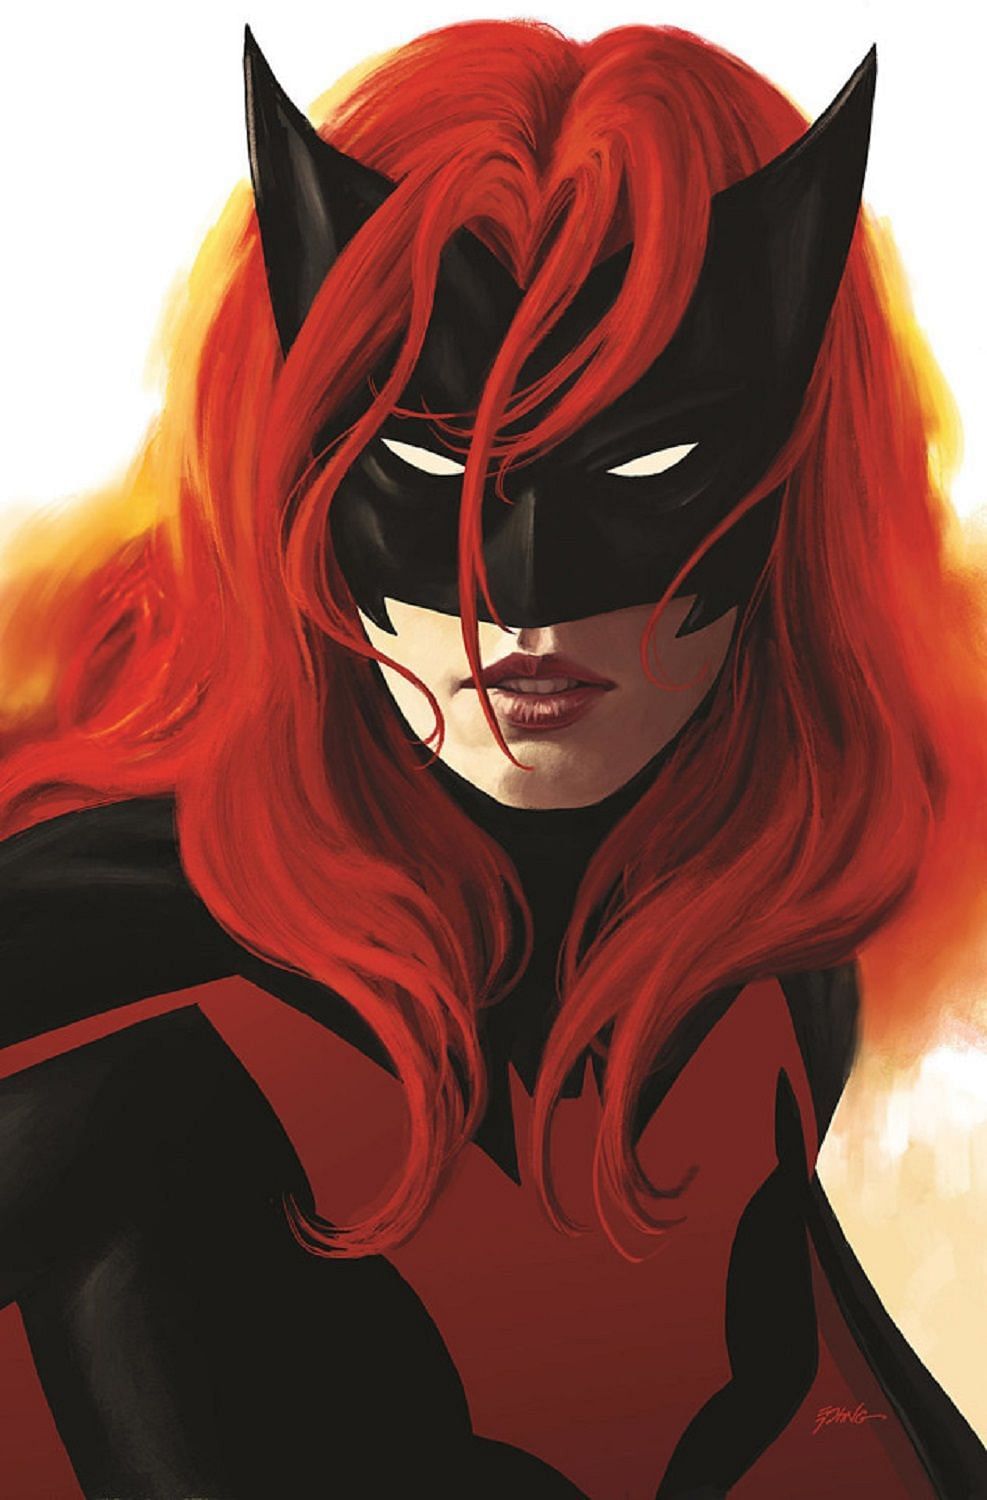 Batwoman (Image via DCComics)